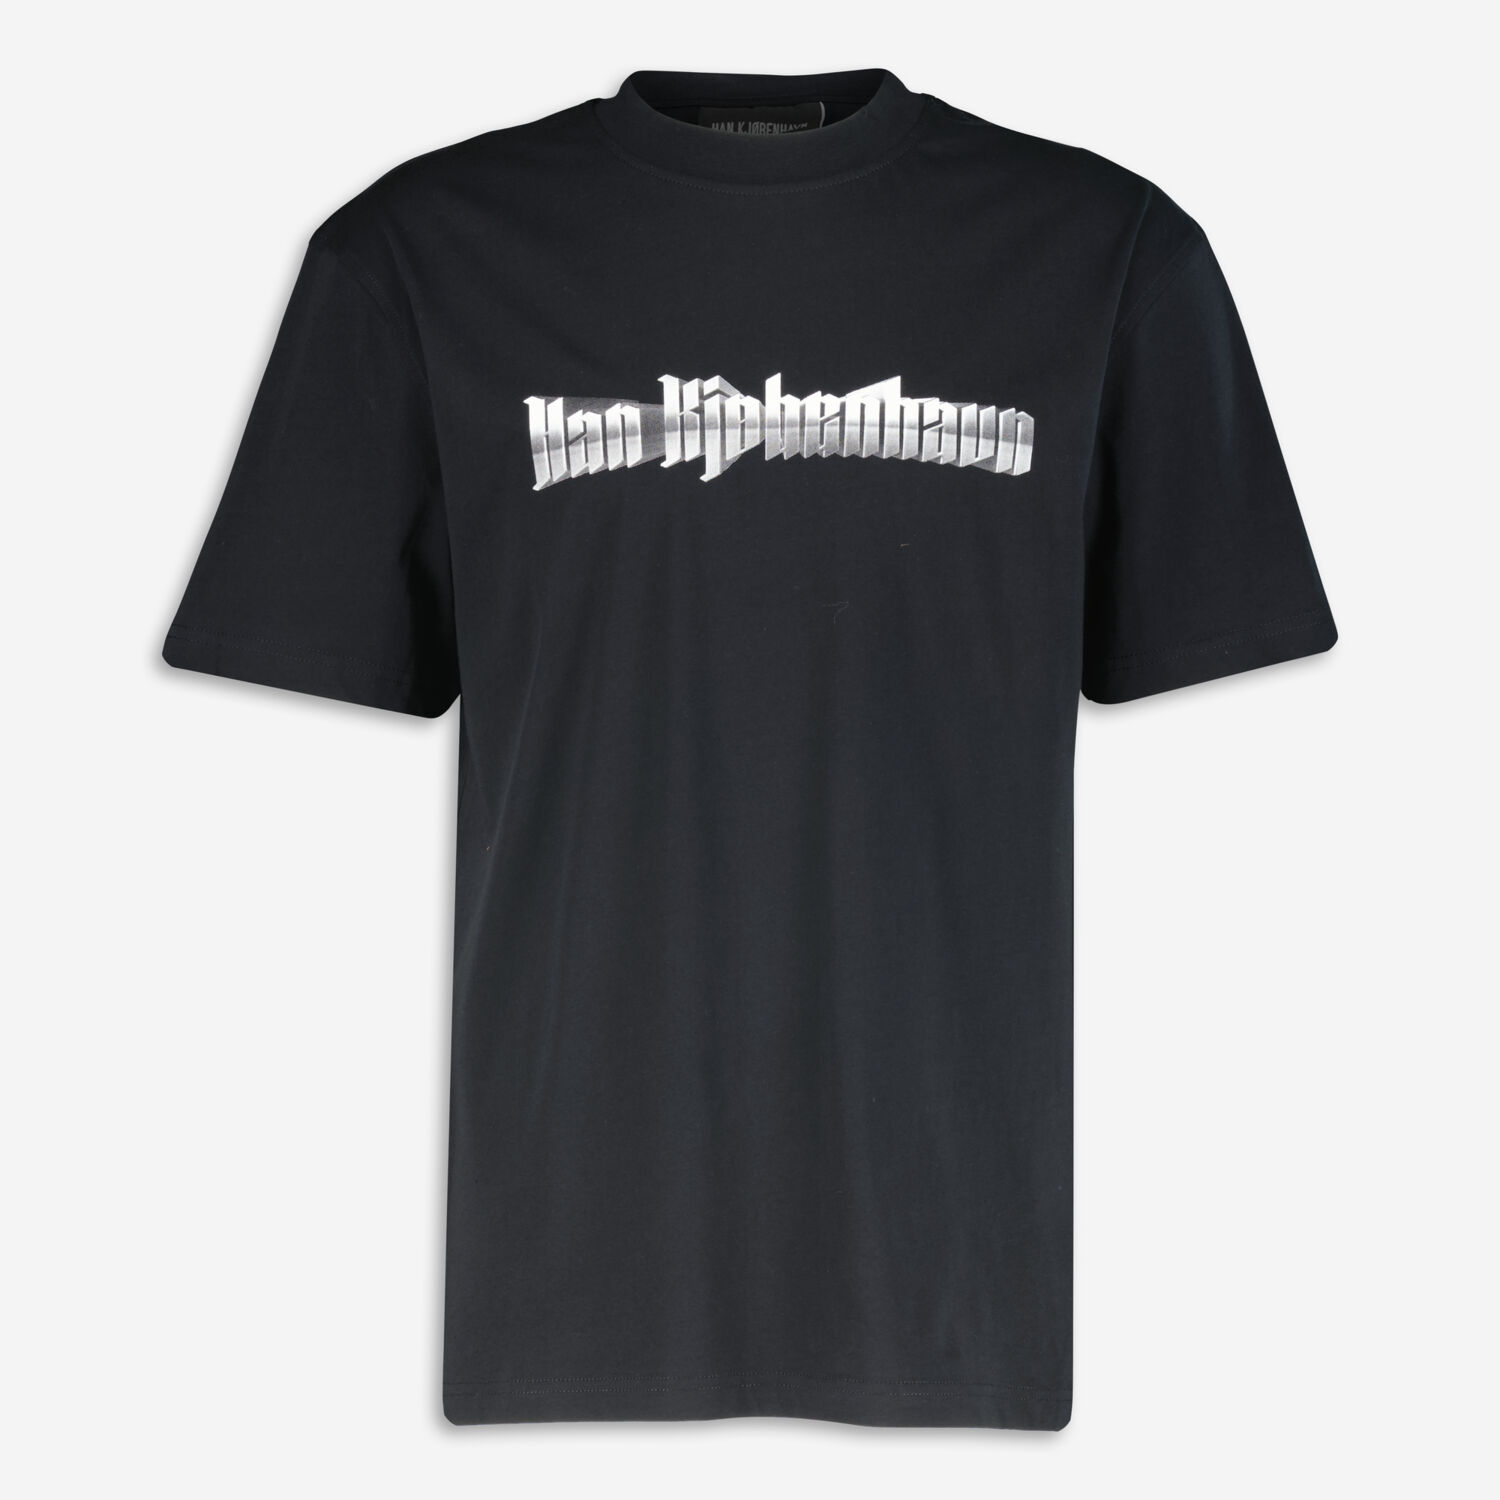 Черная футболка с логотипом Han Kjobenhavn футболка han kjobenhavn размер m белый